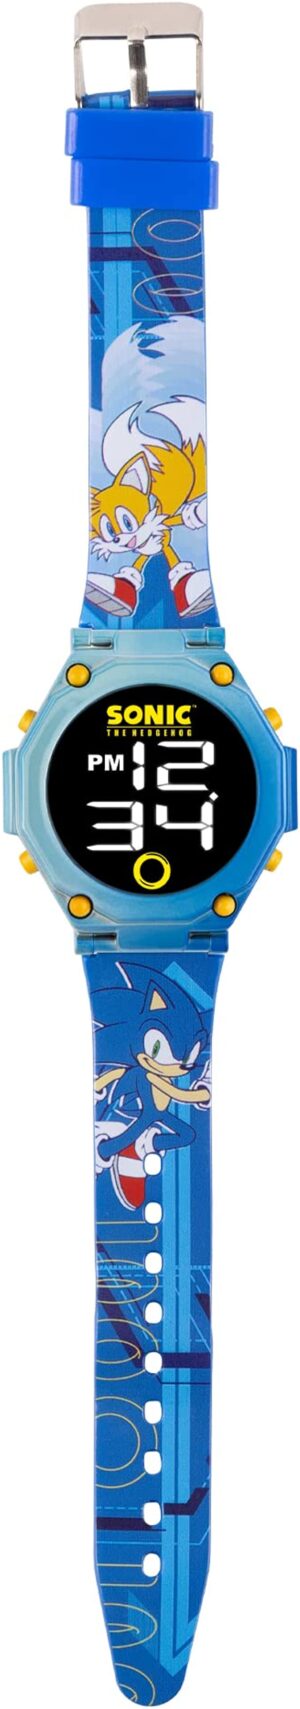 Sonic Digital Quartz Watch